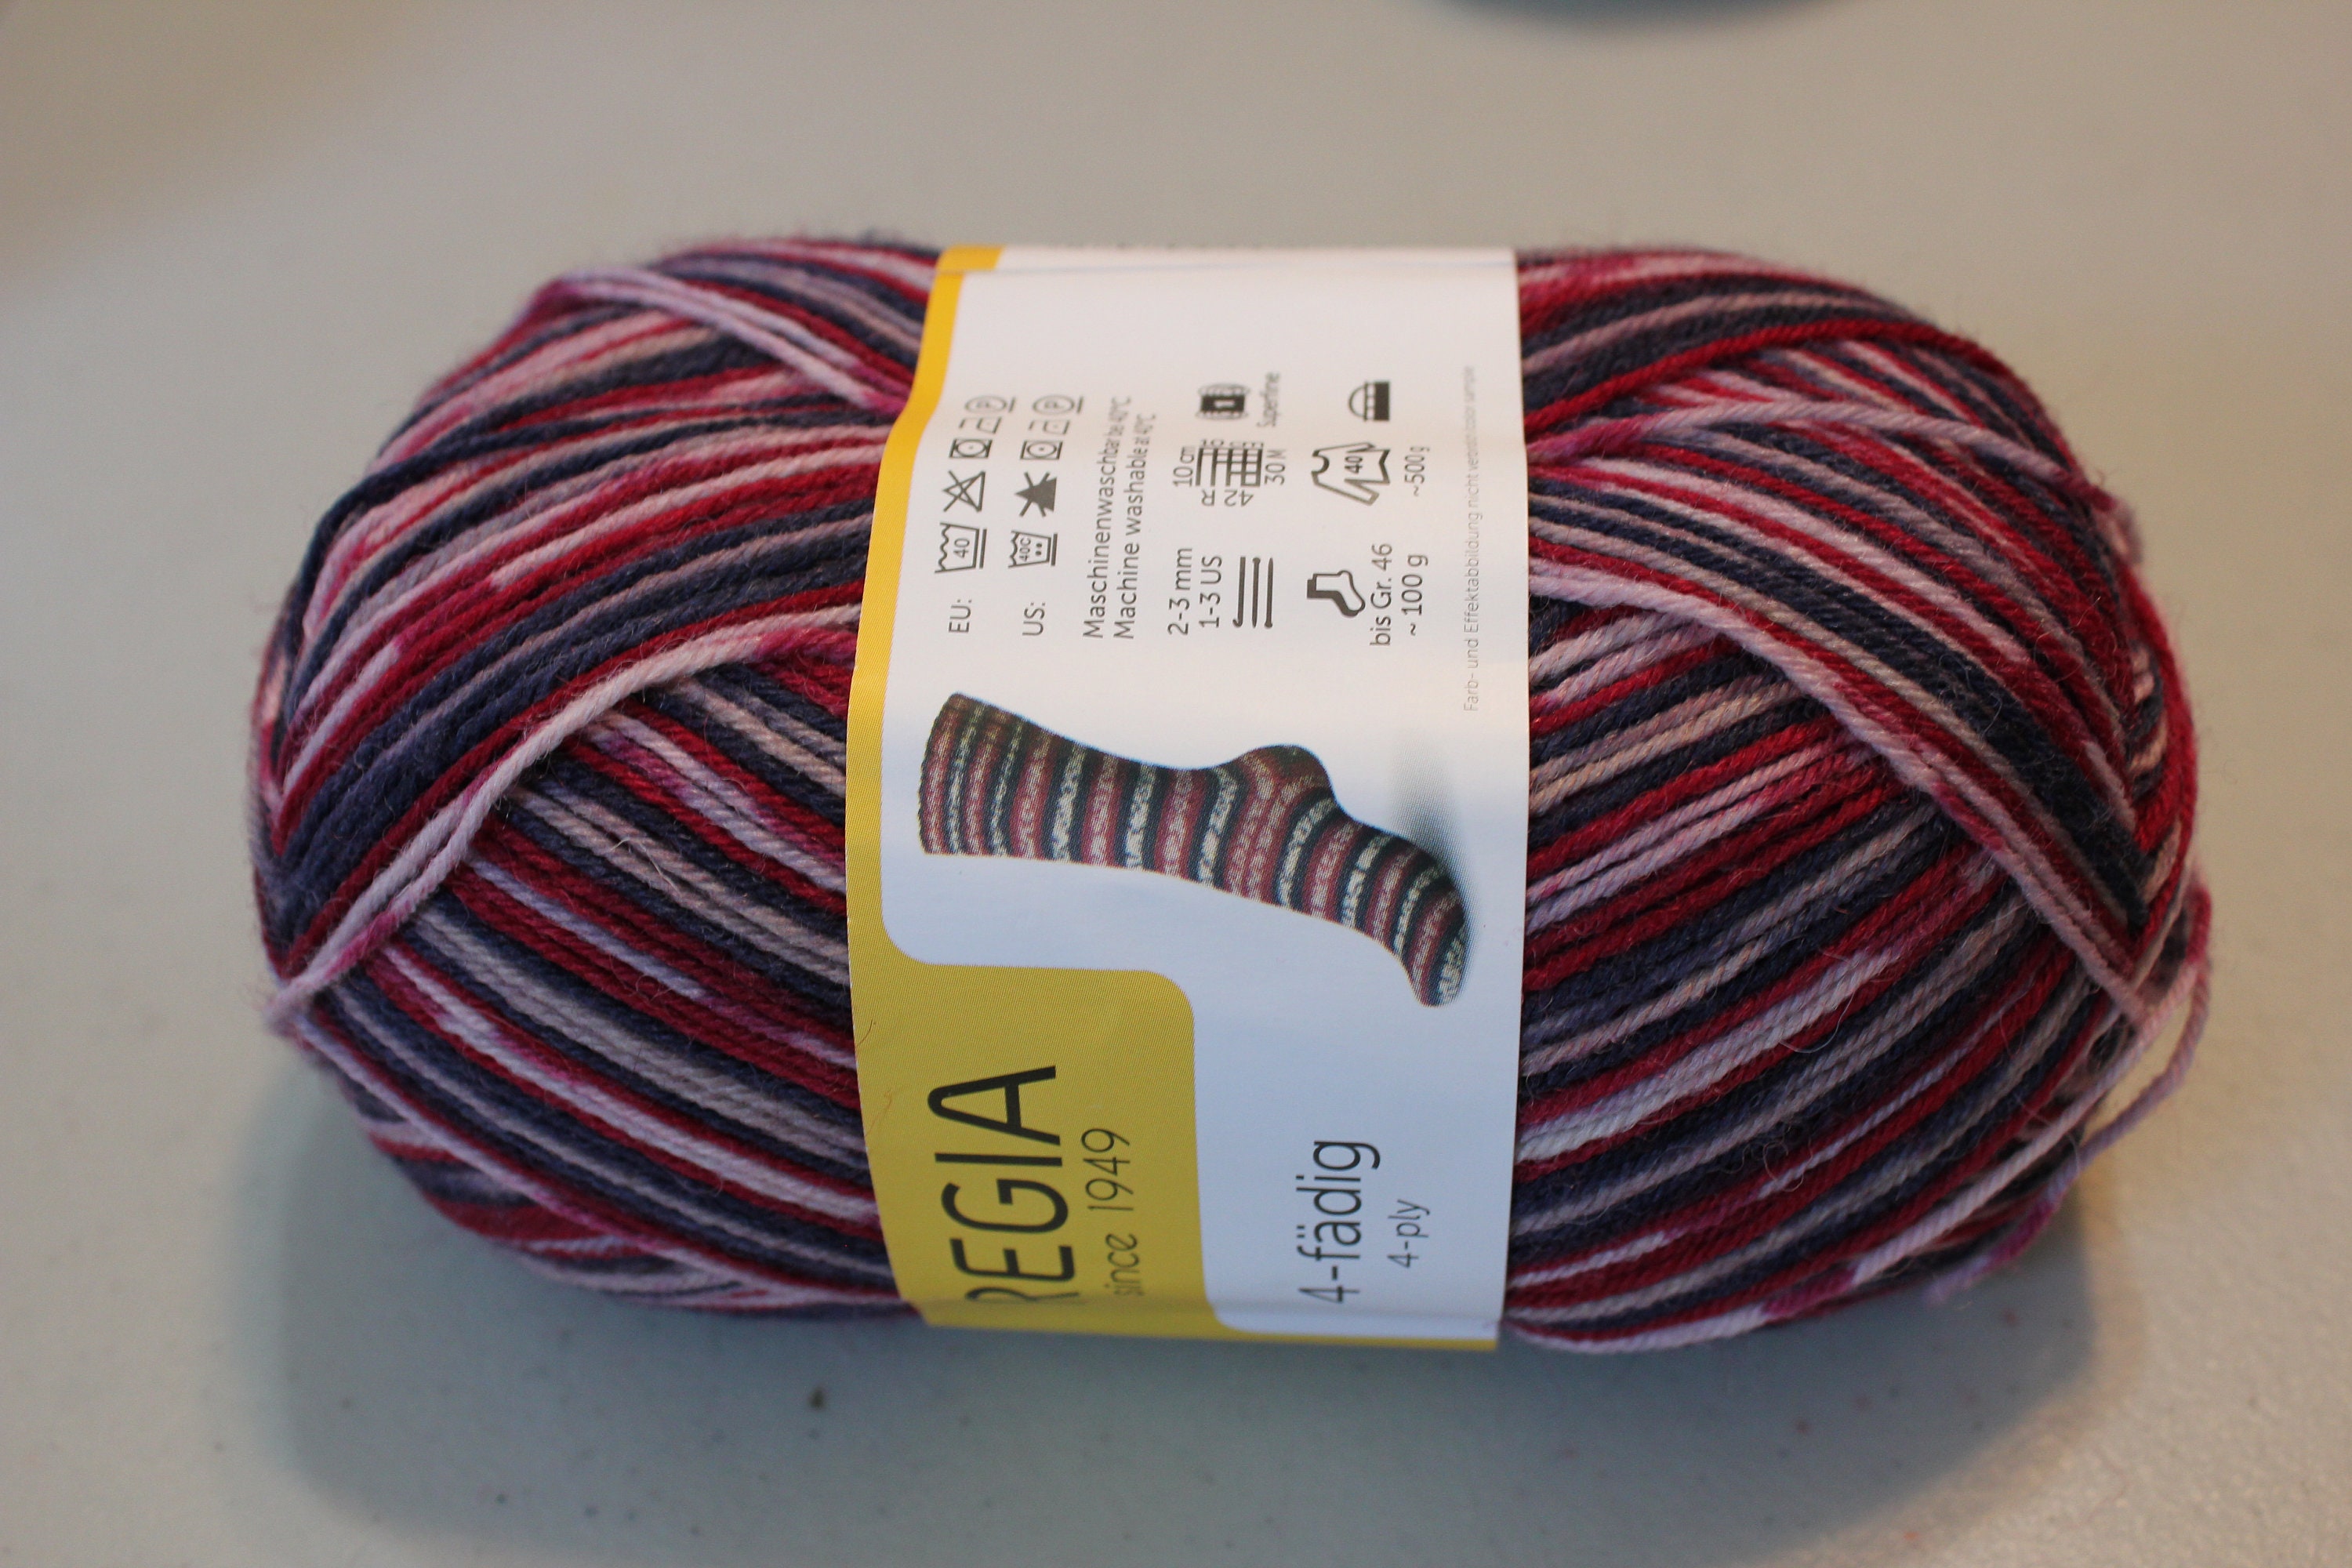 100gr/400m, SMC REGIA Tweed 4-ply / Sock Yarn / Wool Yarn 